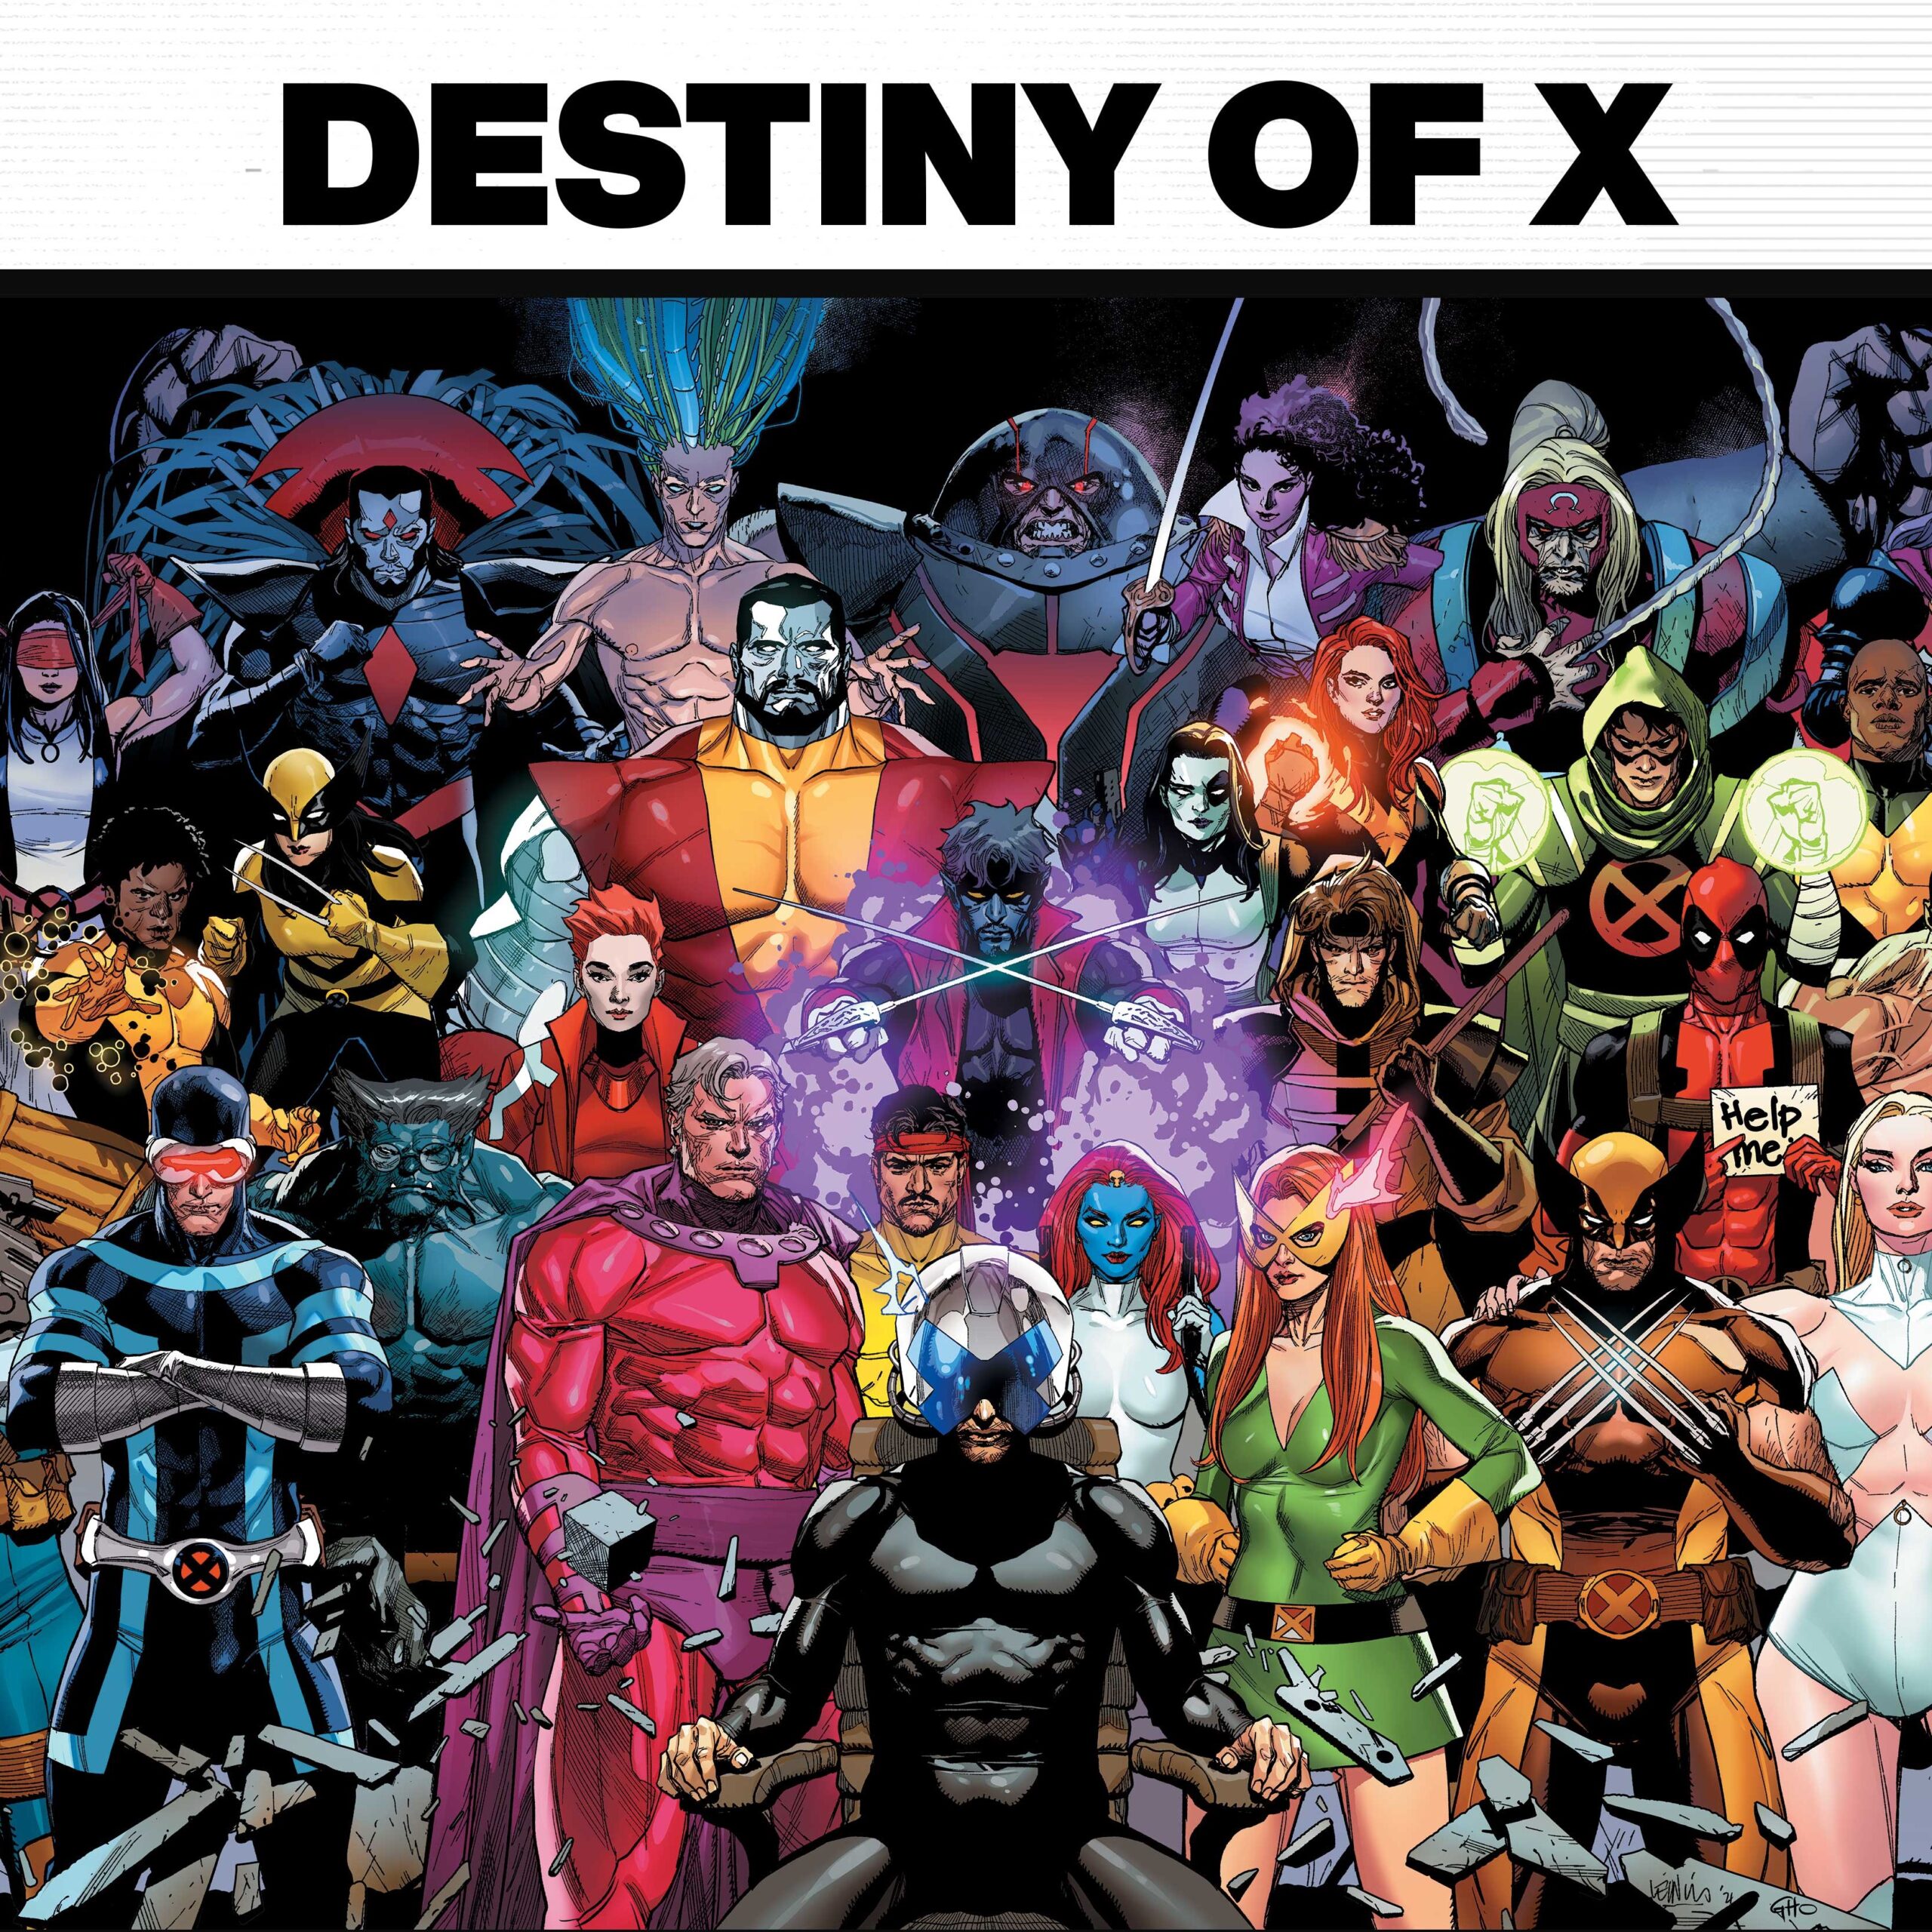 Marvel's New Mutants Celebrates 40th Anniversary